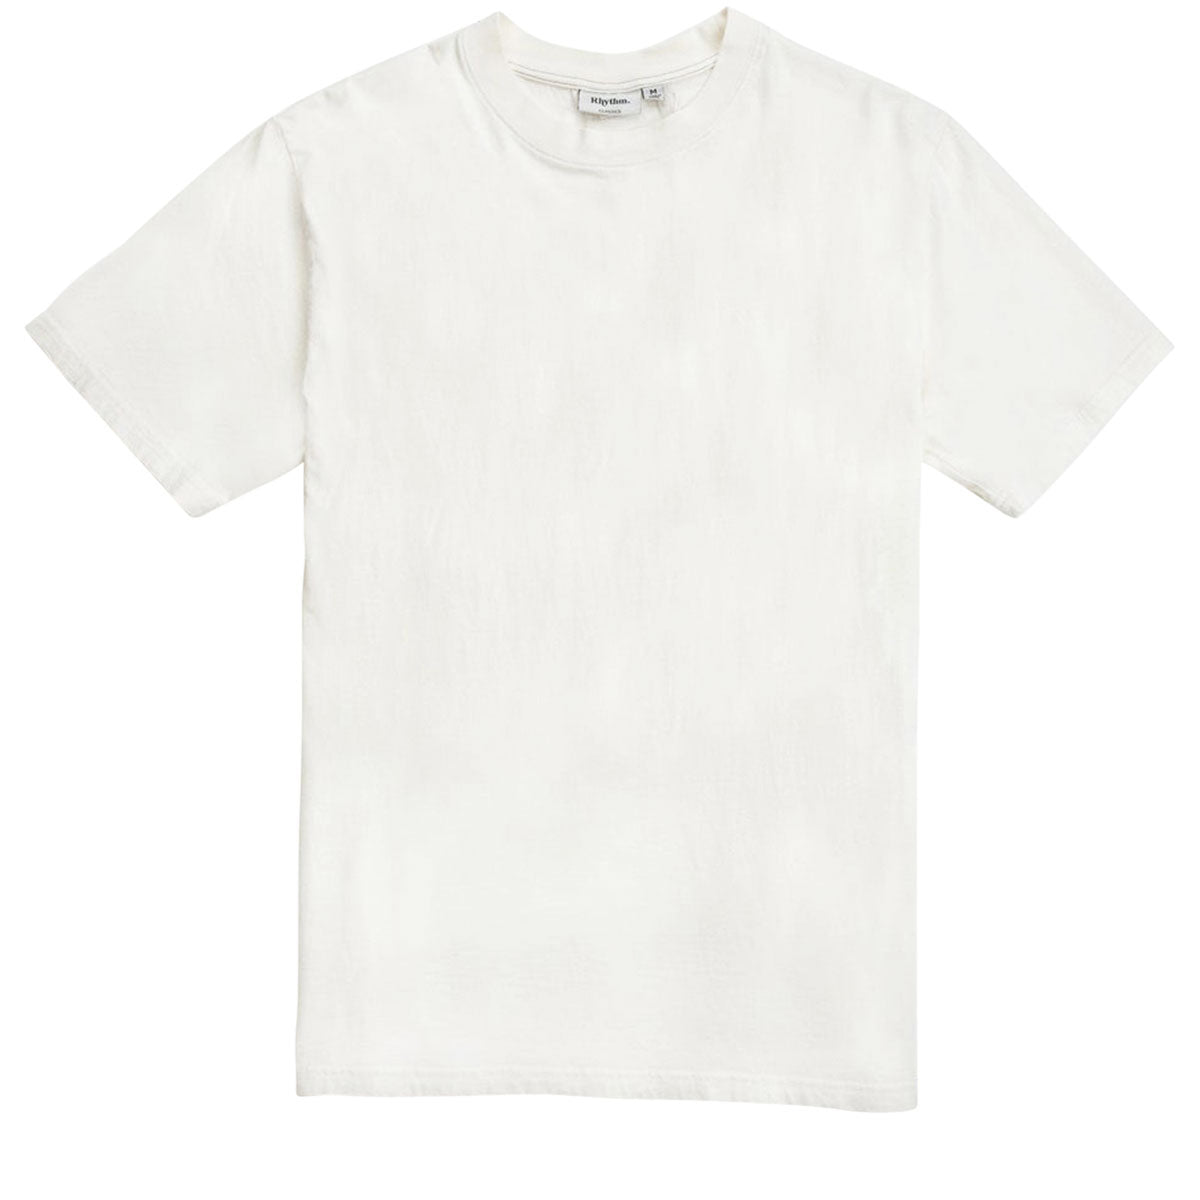 Rhythm Classic Brand T-Shirt - Vintage White image 1